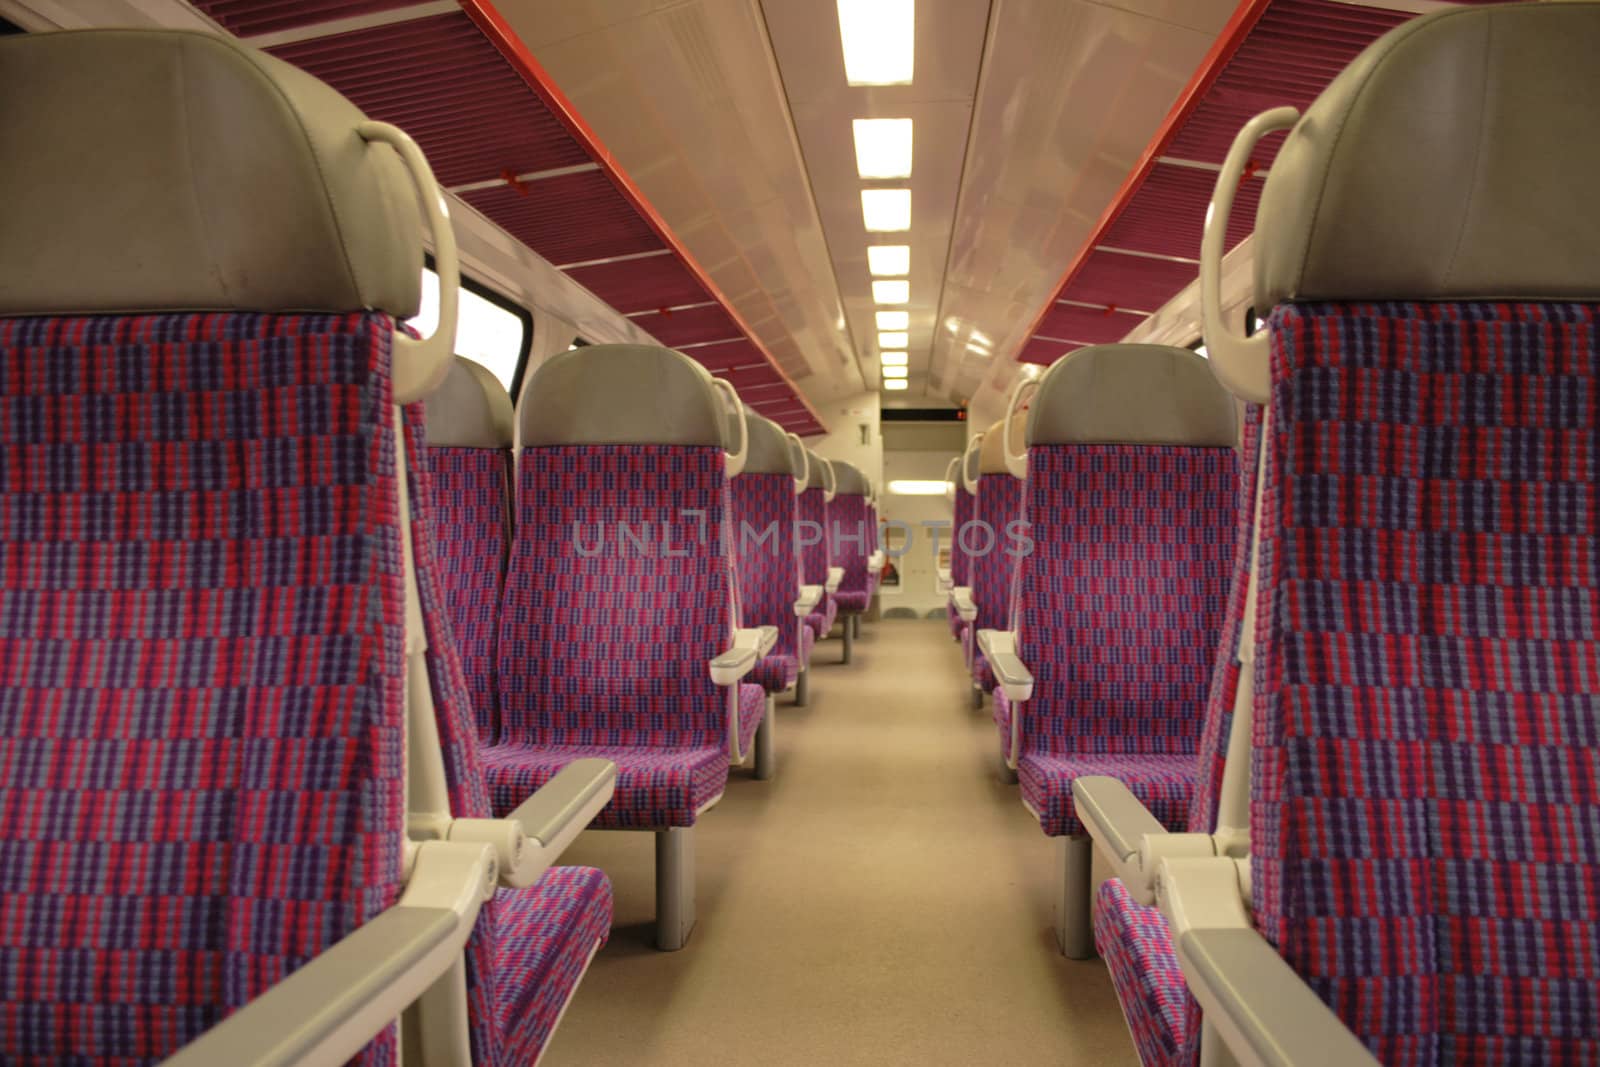 intercity train interior by jonnysek